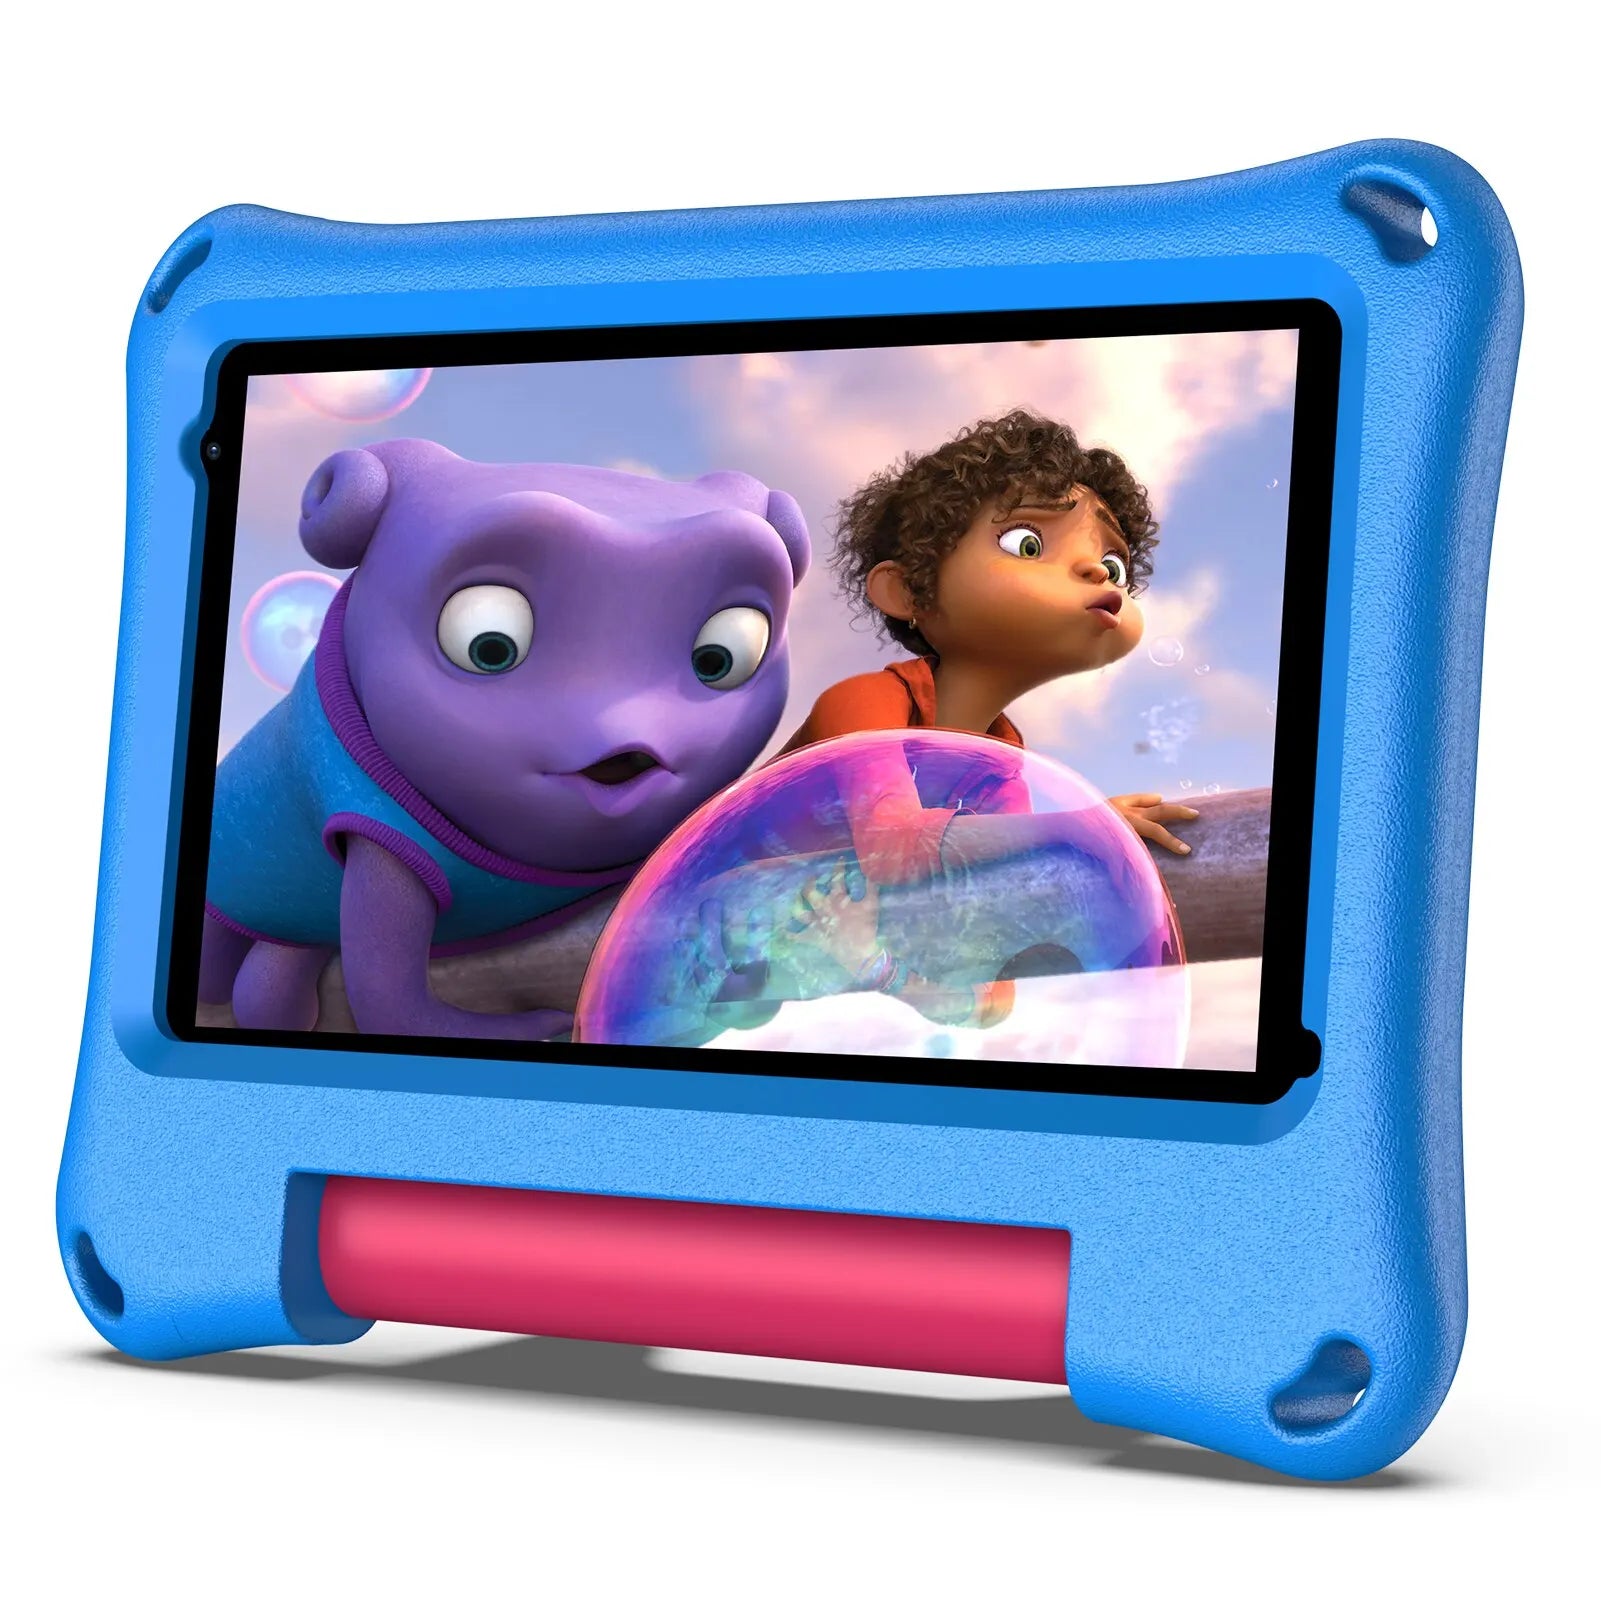 VASOUN Kids Tablet 7 Inch - Android 11, 2GB RAM, 32GB Storage, WiFi, Dual Camera, Parental Control, Google Playstore European regulations / Blue